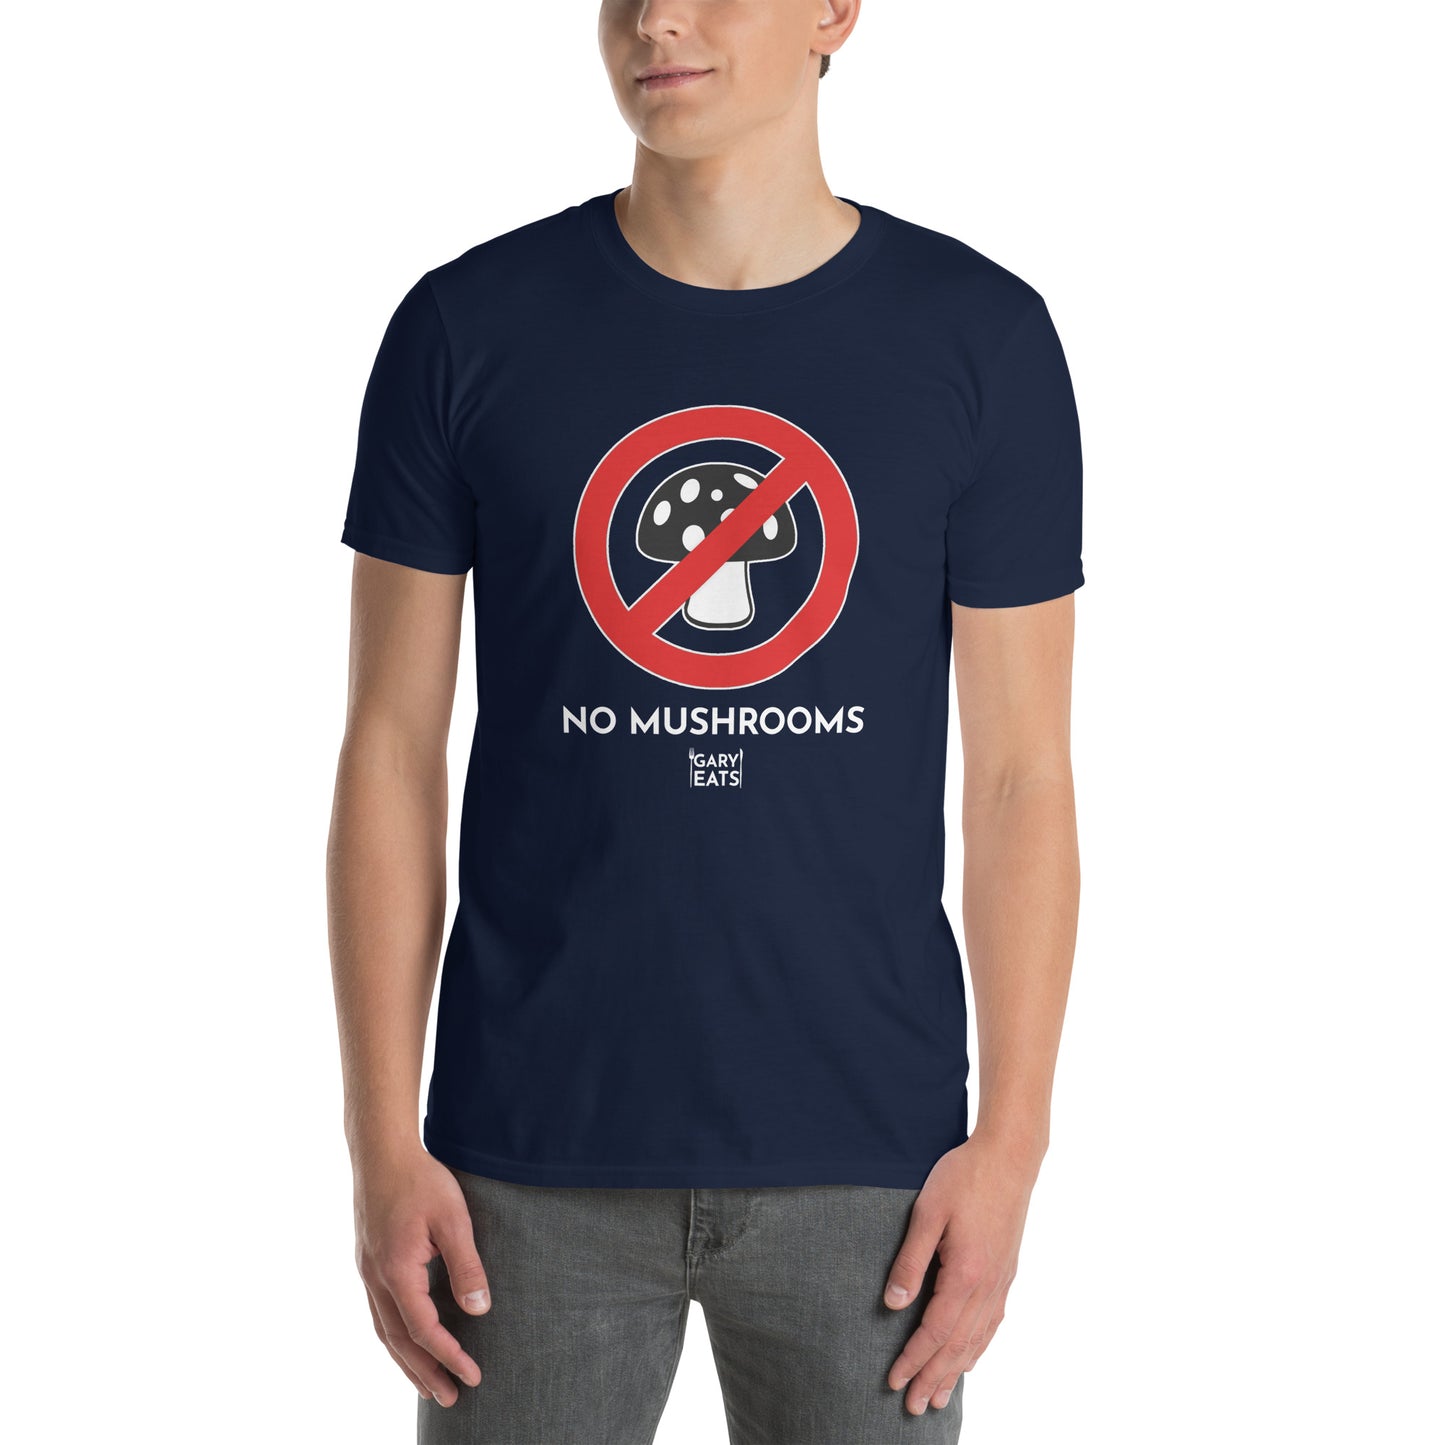 Gary Eats No Mushrooms Unisex T-Shirt